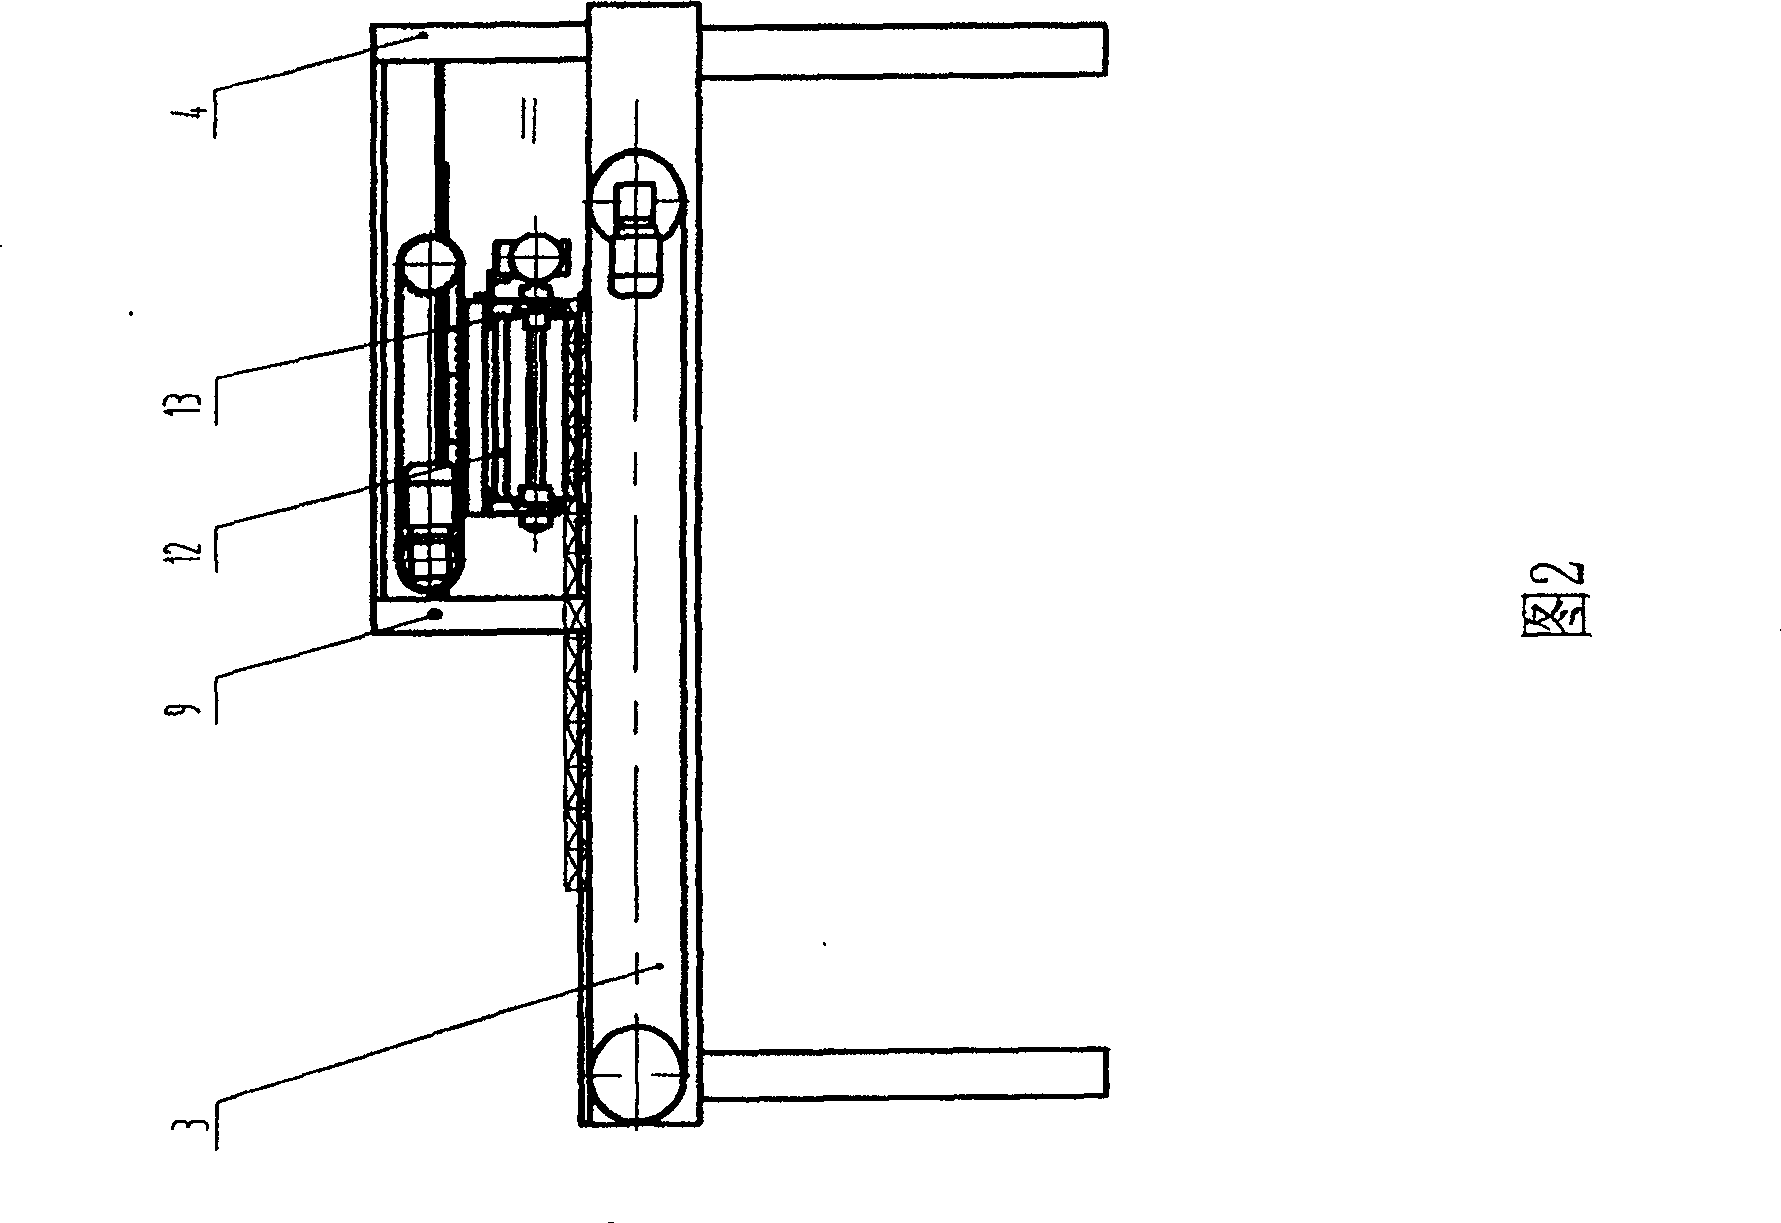 Automatic dispense system of randomly assembled sorting unit